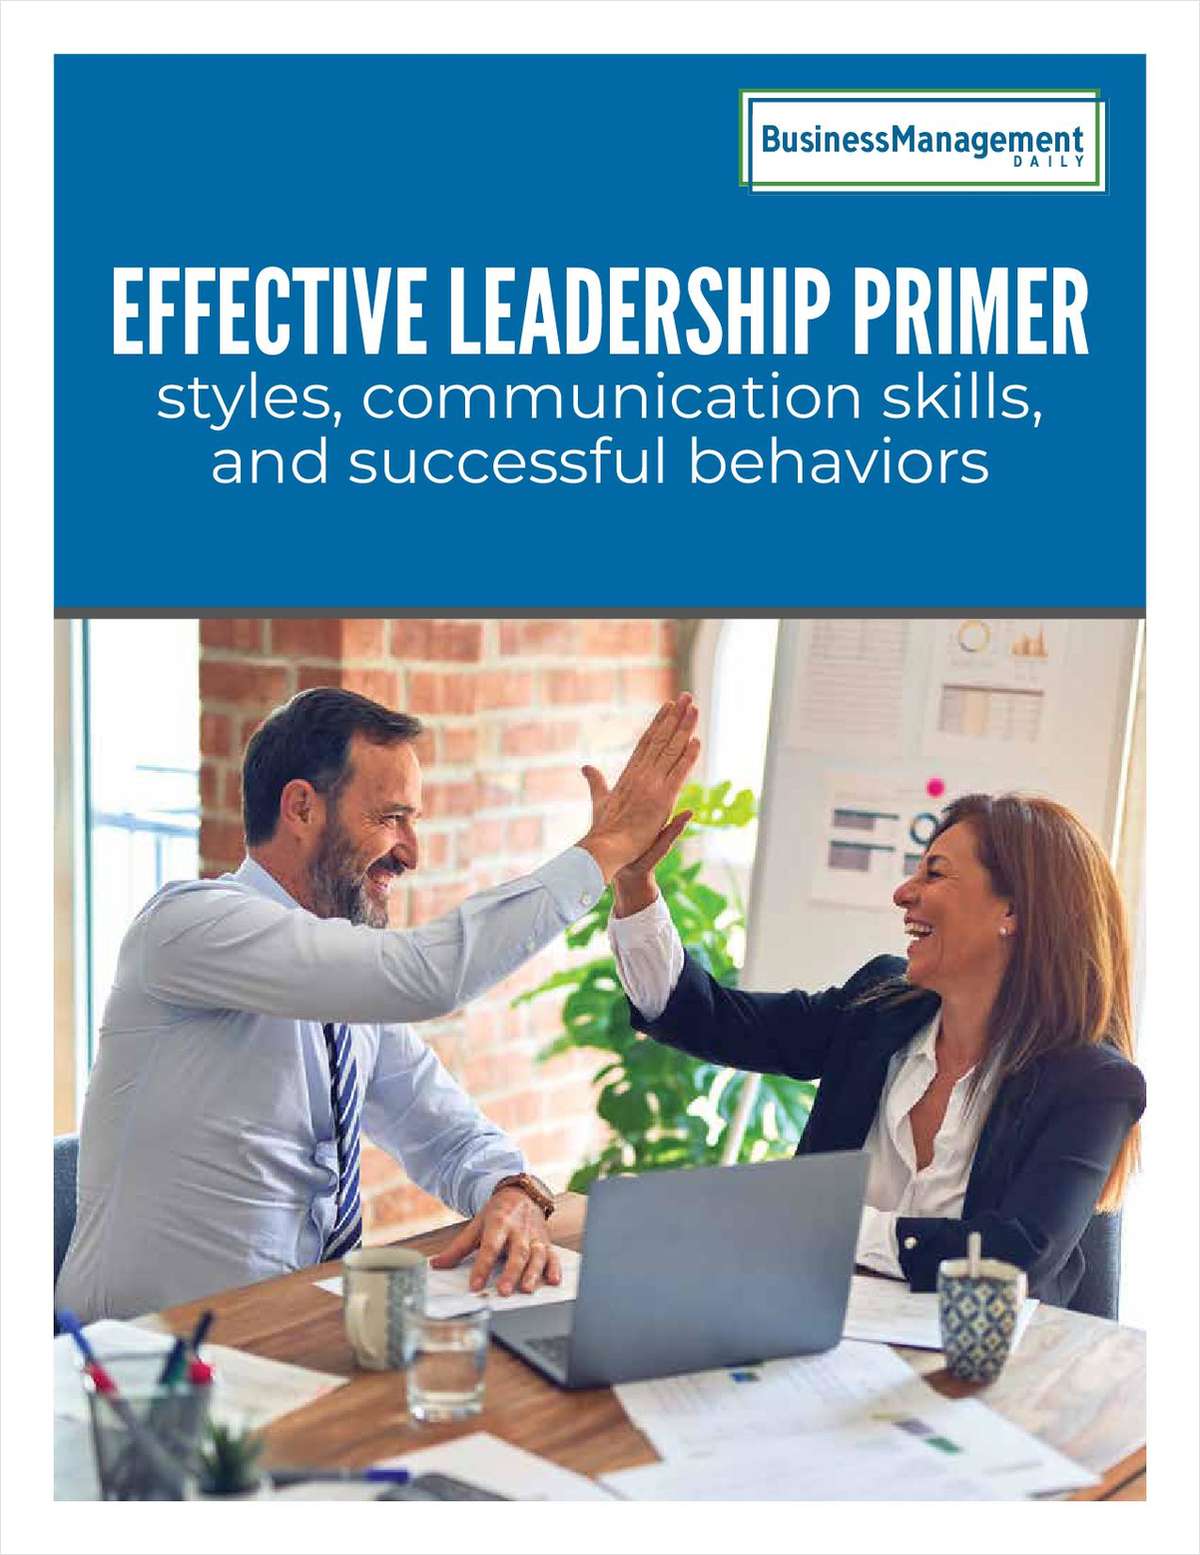 Effective Leadership Primer: Styles, communication skills, and successful behaviors